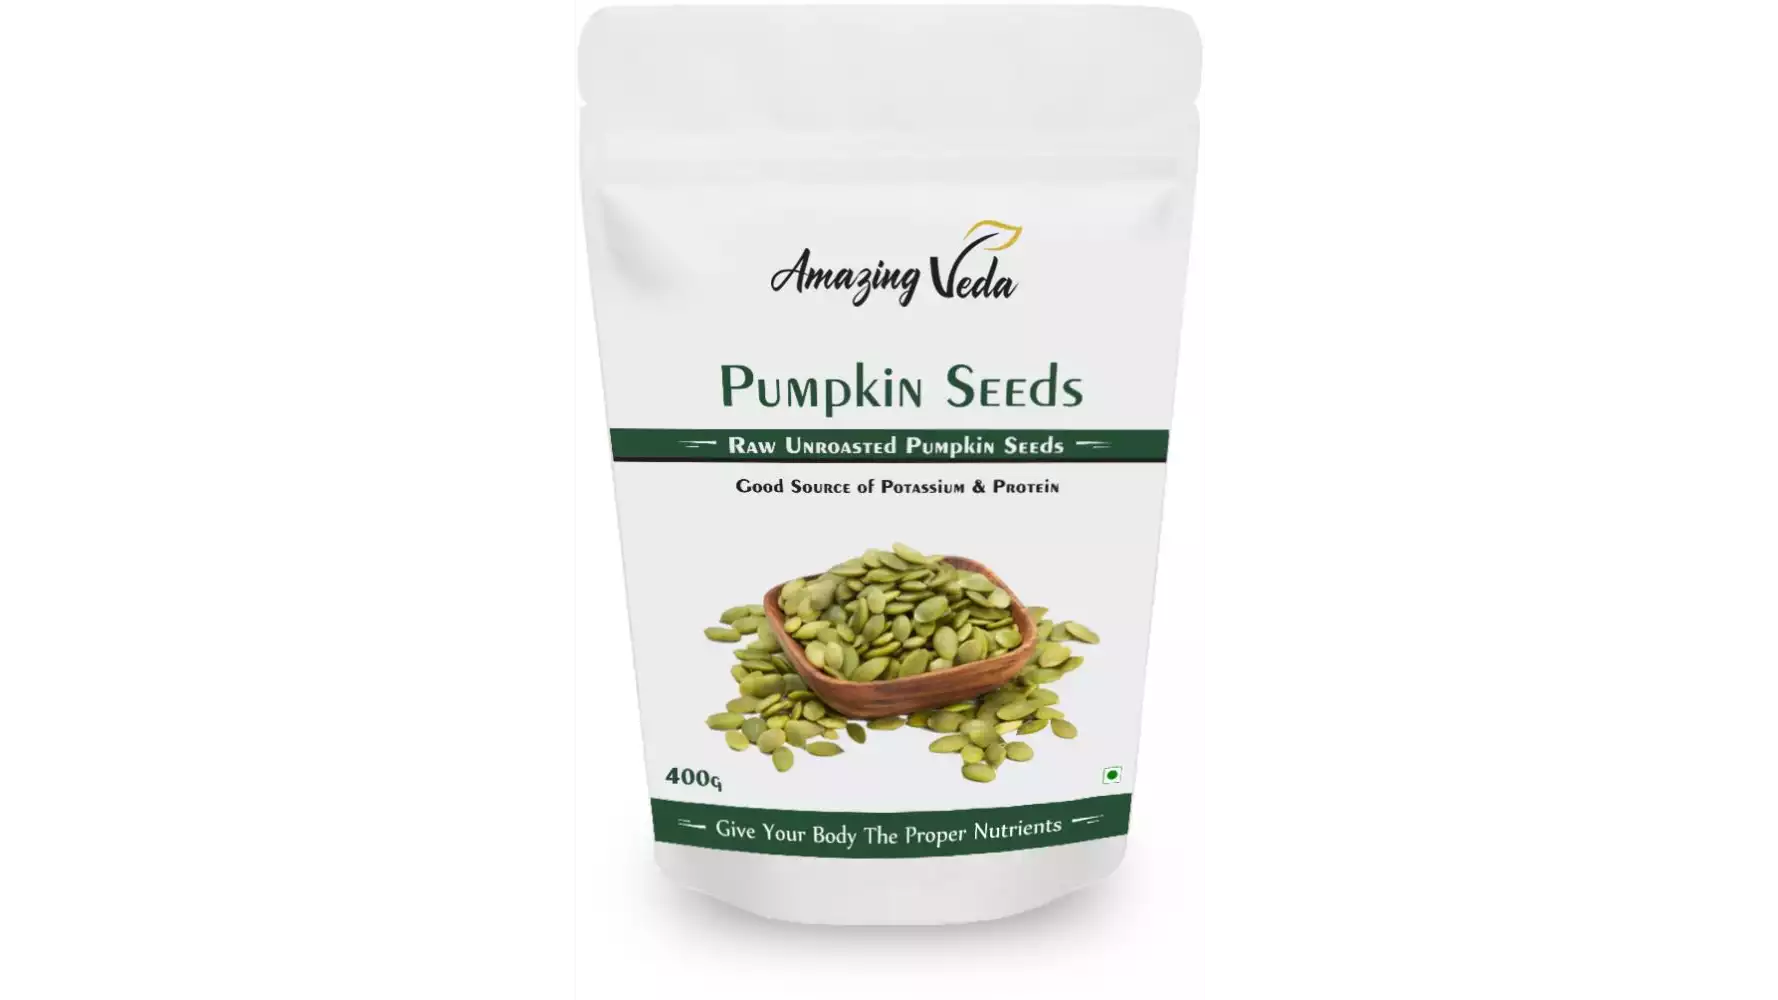 Amazing Veda Raw Pumpkin Seeds (400g)